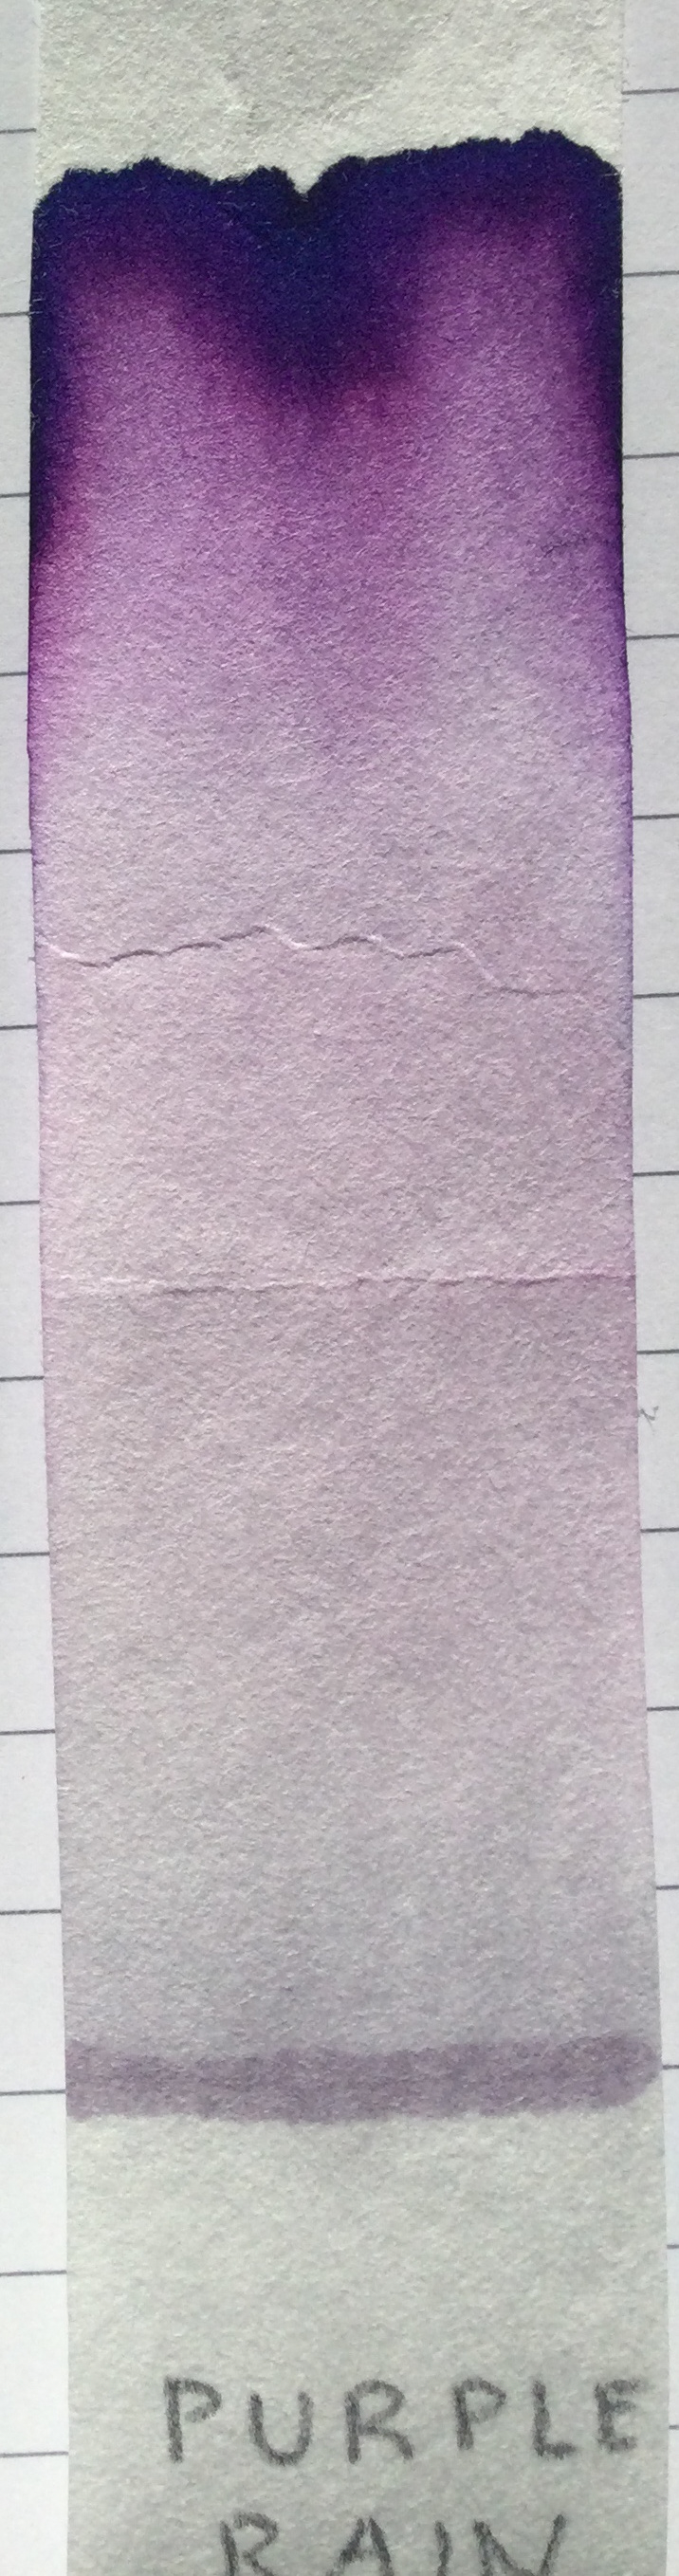 Diamine-Purple-Rain-Chromatogramm-Wassser.jpg